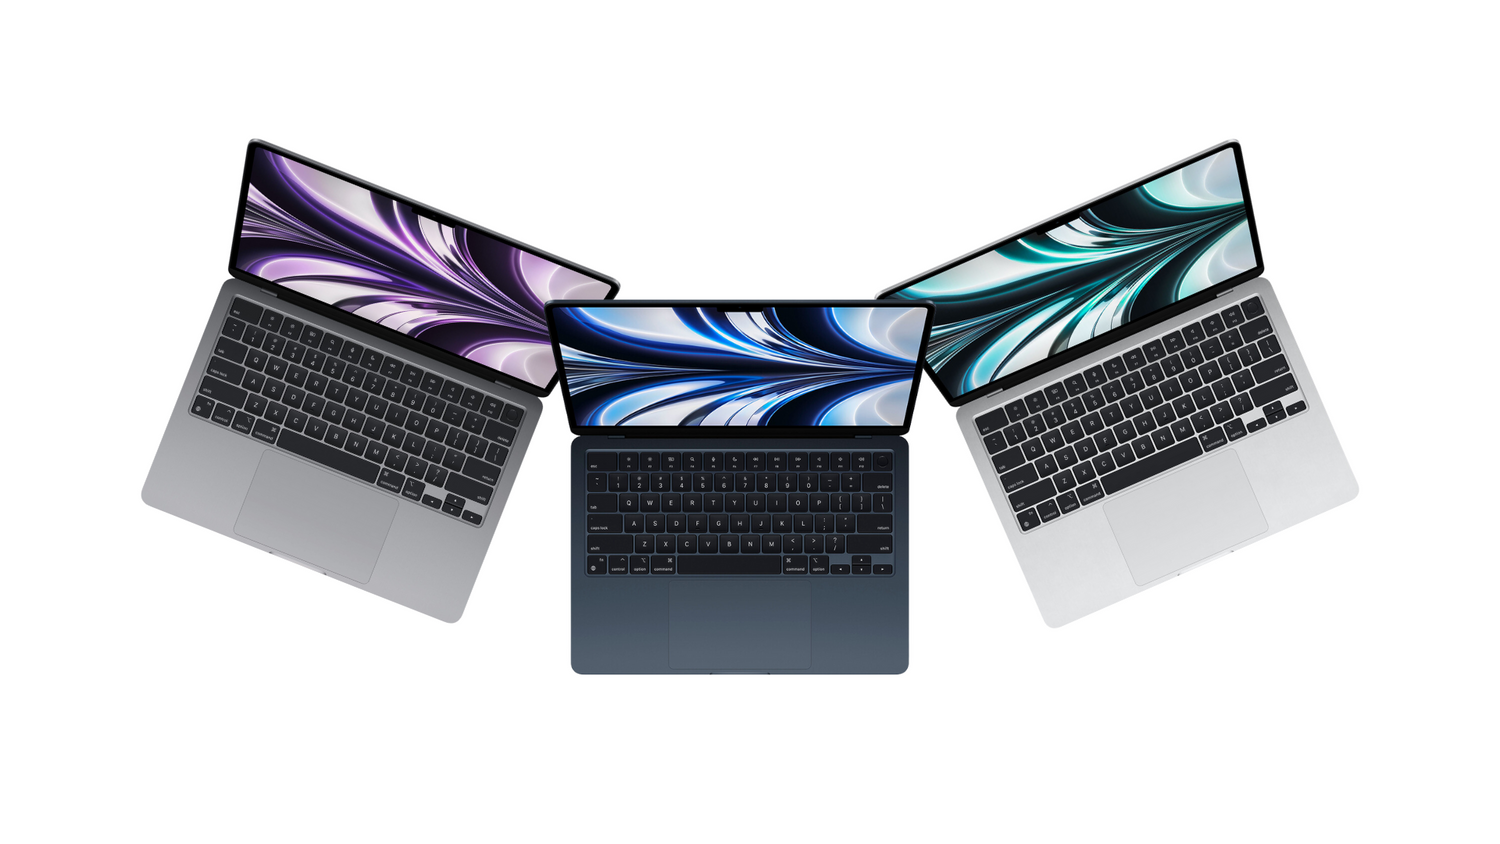 Three MacBook Pro's in a line